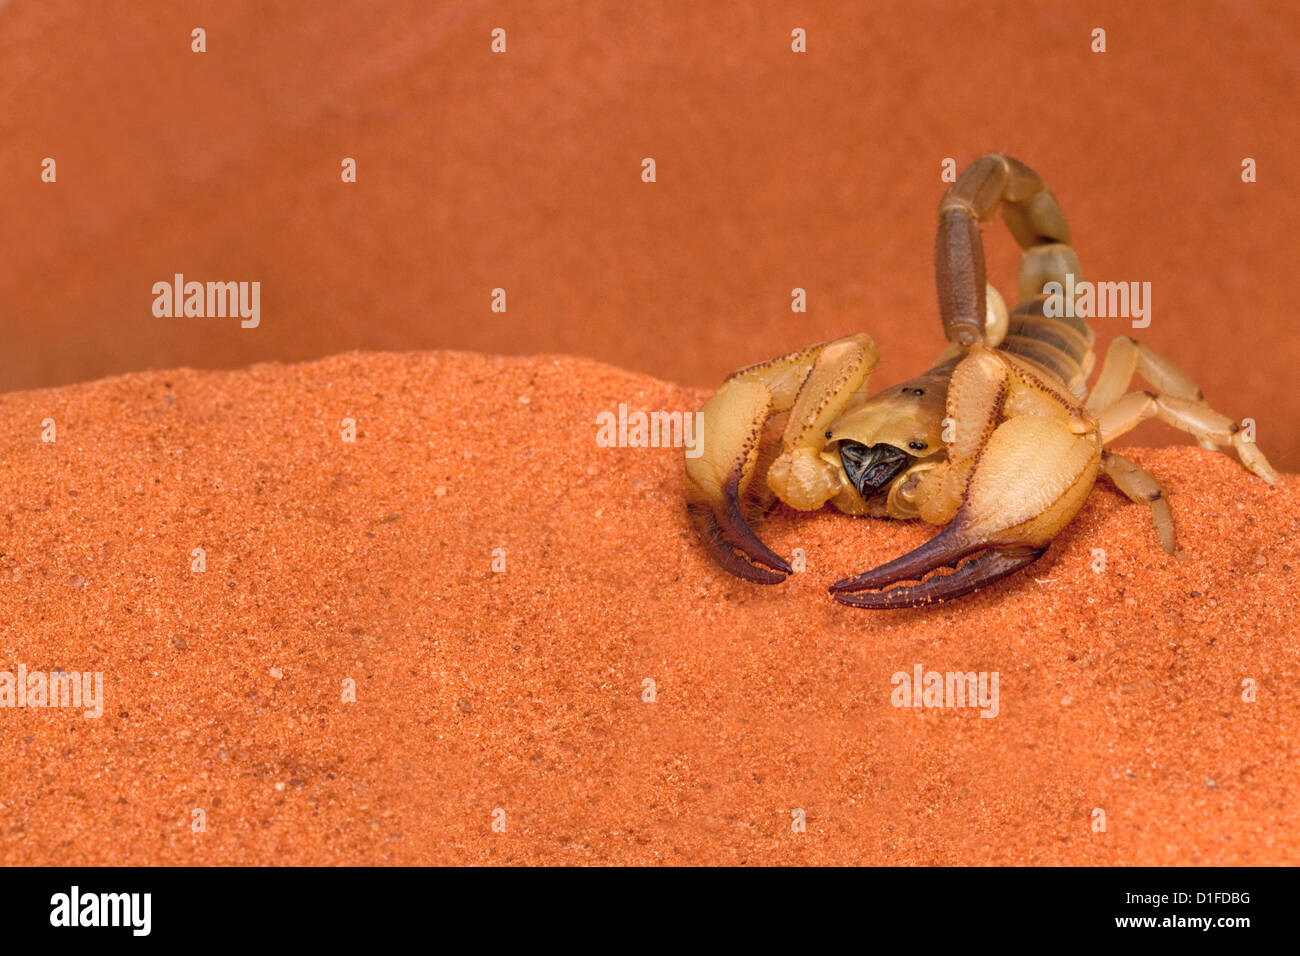 Opistophthalmus wahlbergii scorpion, Tswalu Kalahari game reserve, Northern Cape, South Africa, Africa Stock Photo